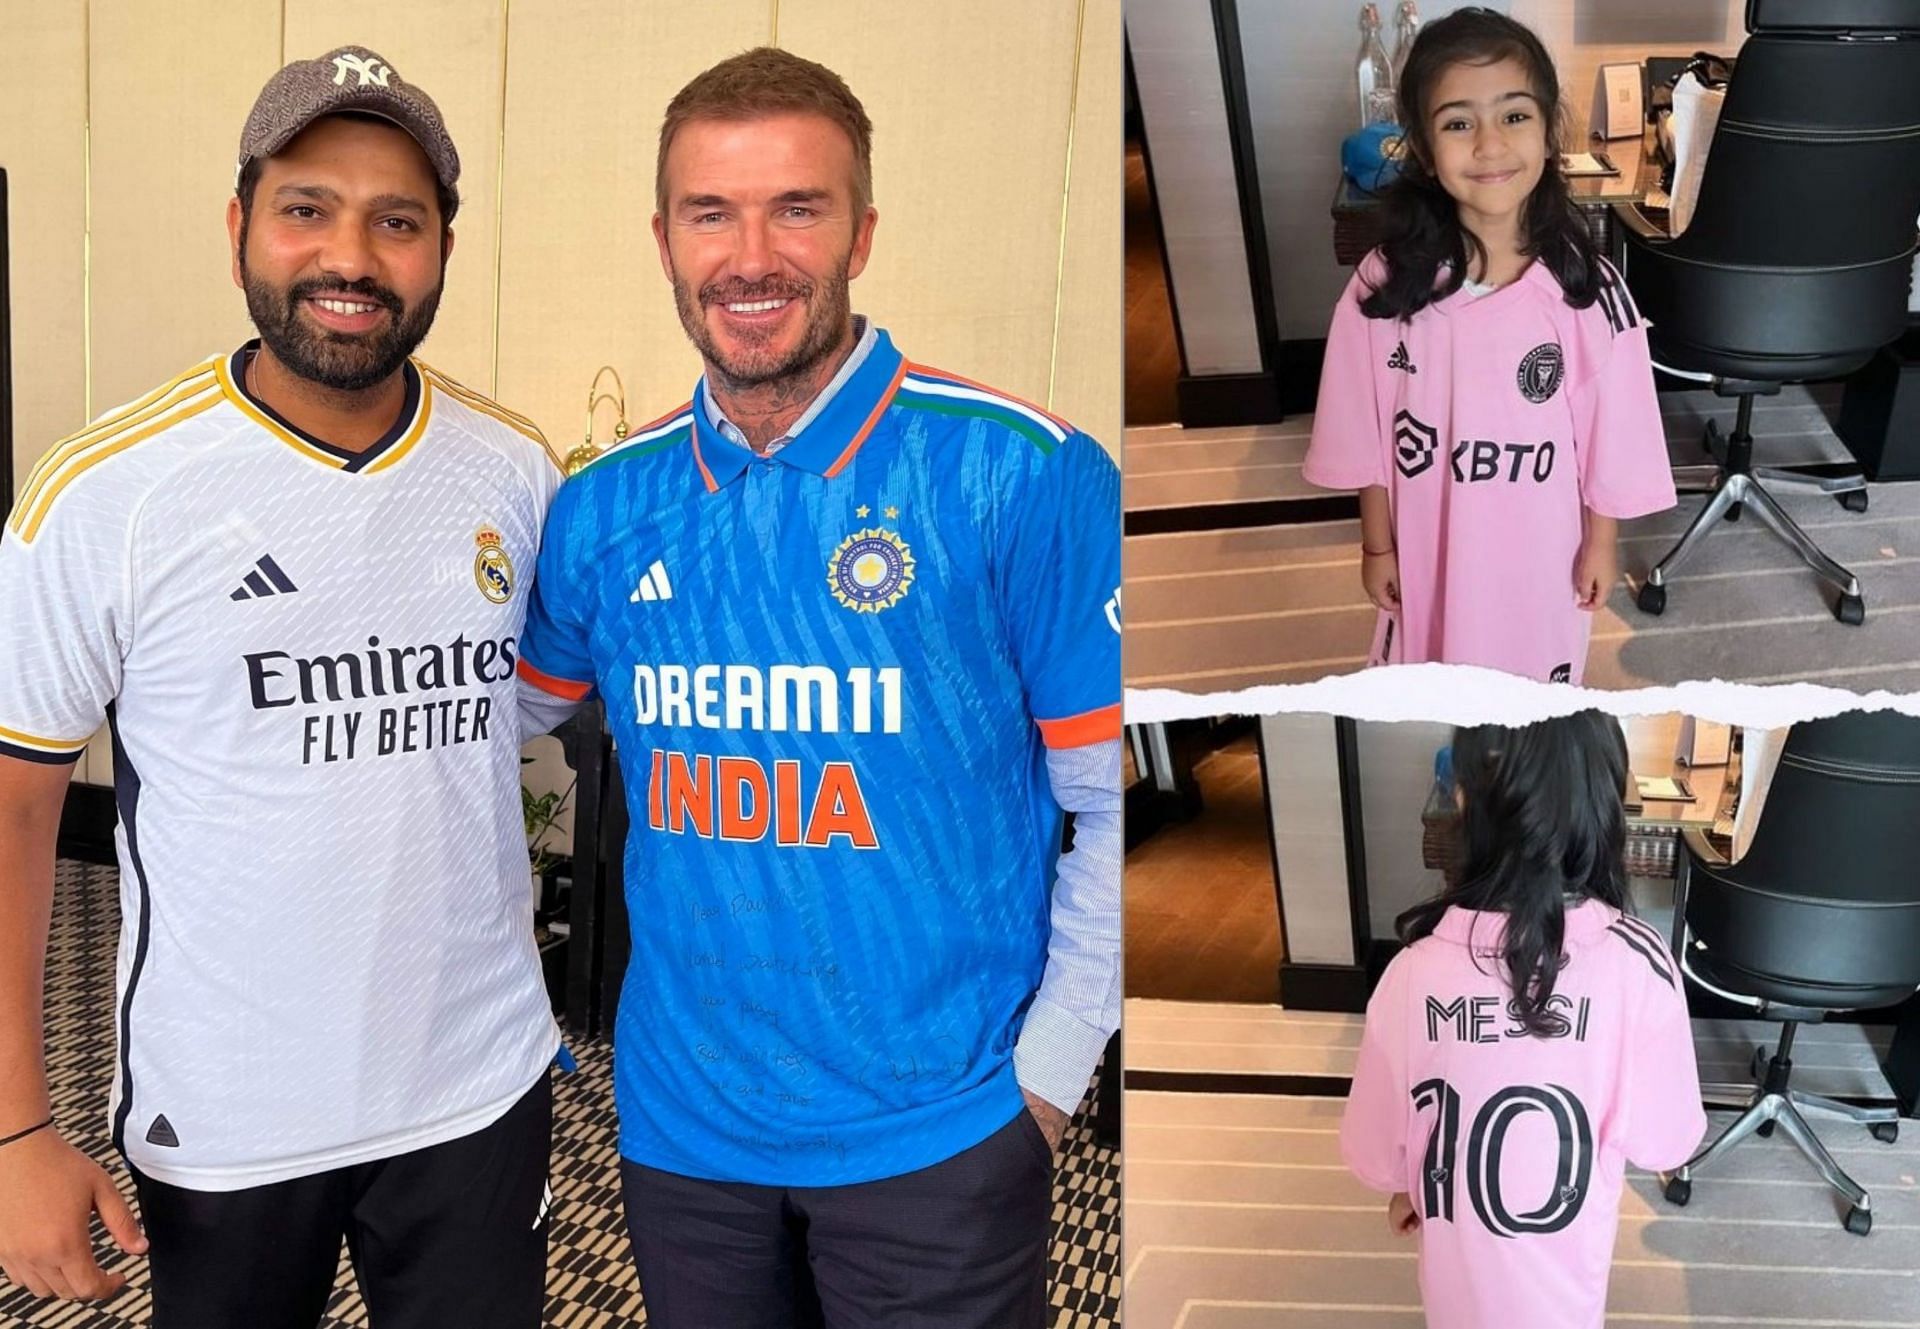 David Beckham gifts a Messi jersey to Rohit Sharma